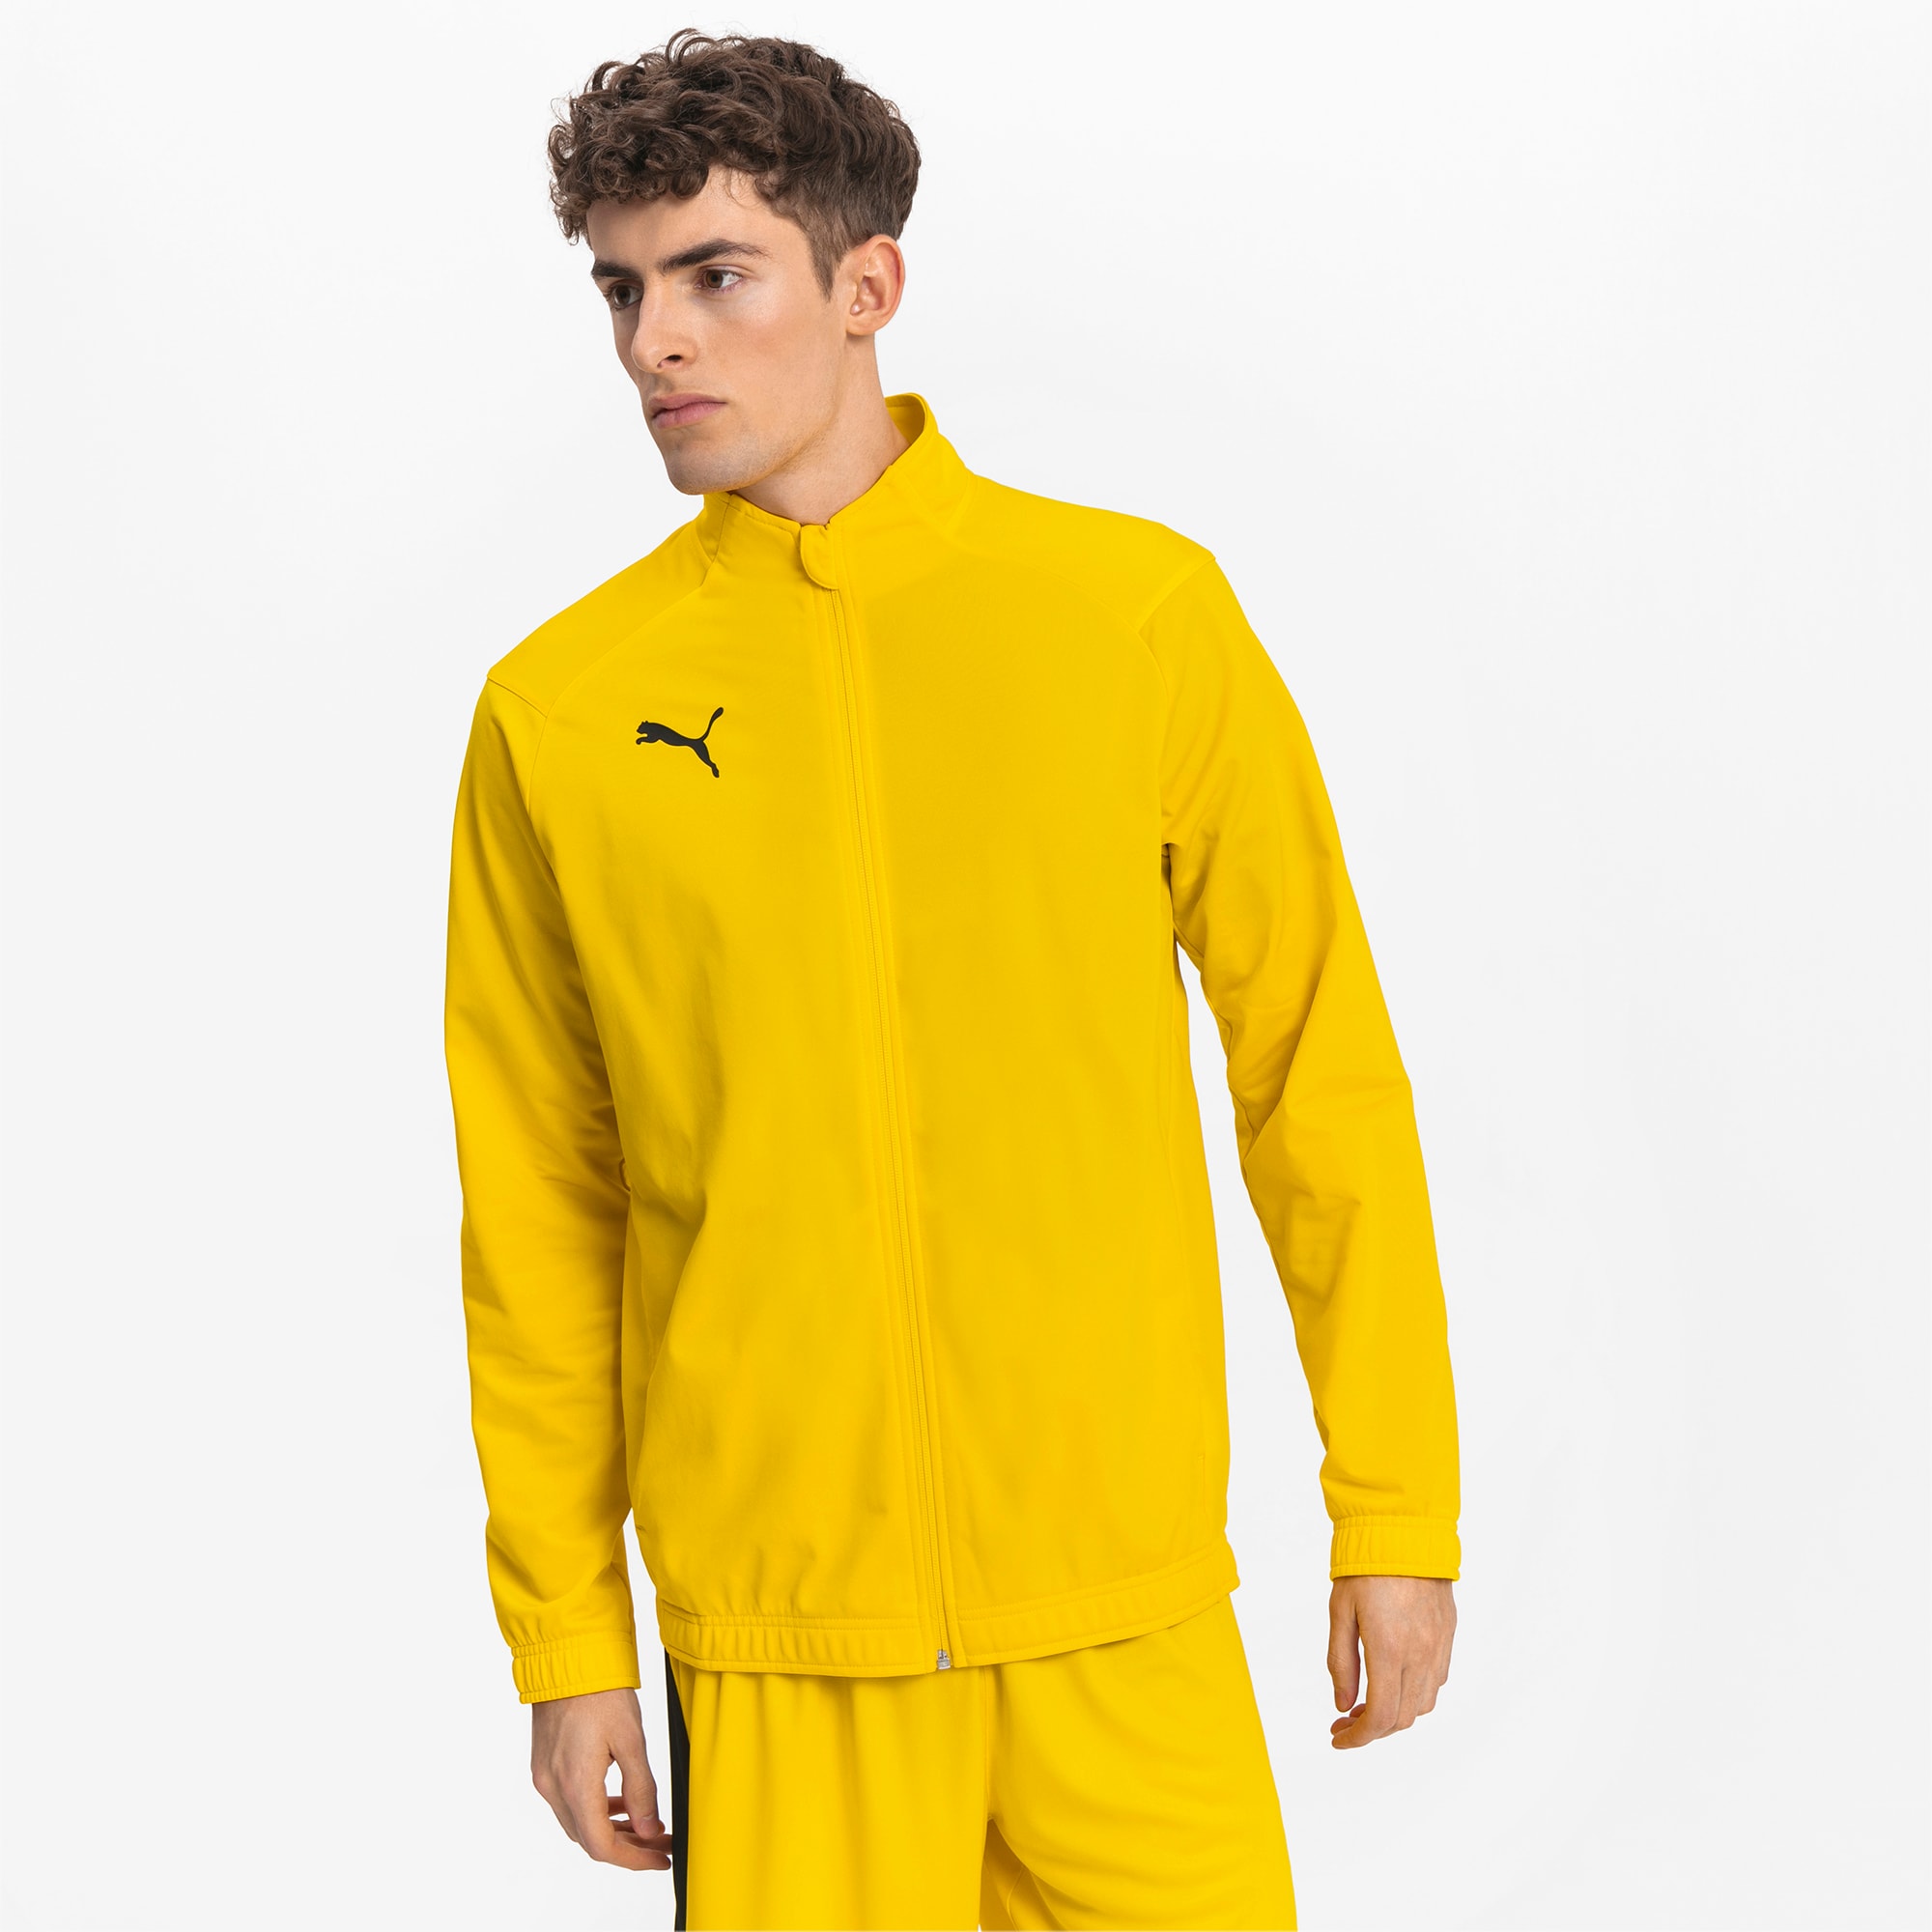 puma yellow jacket